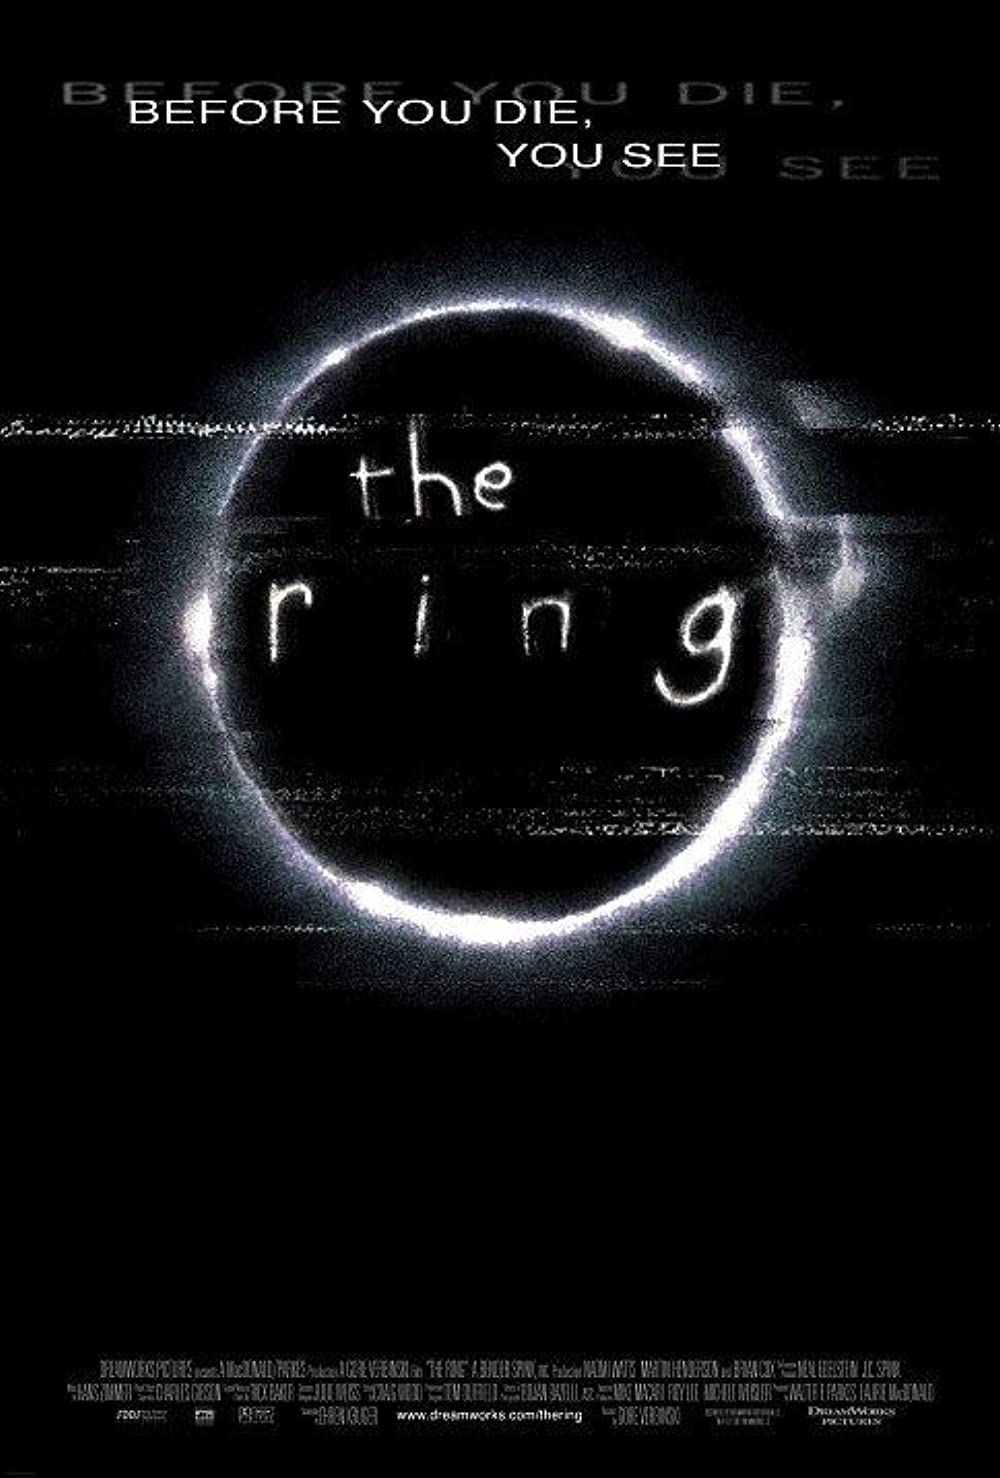 Filmbeschreibung zu The Ring